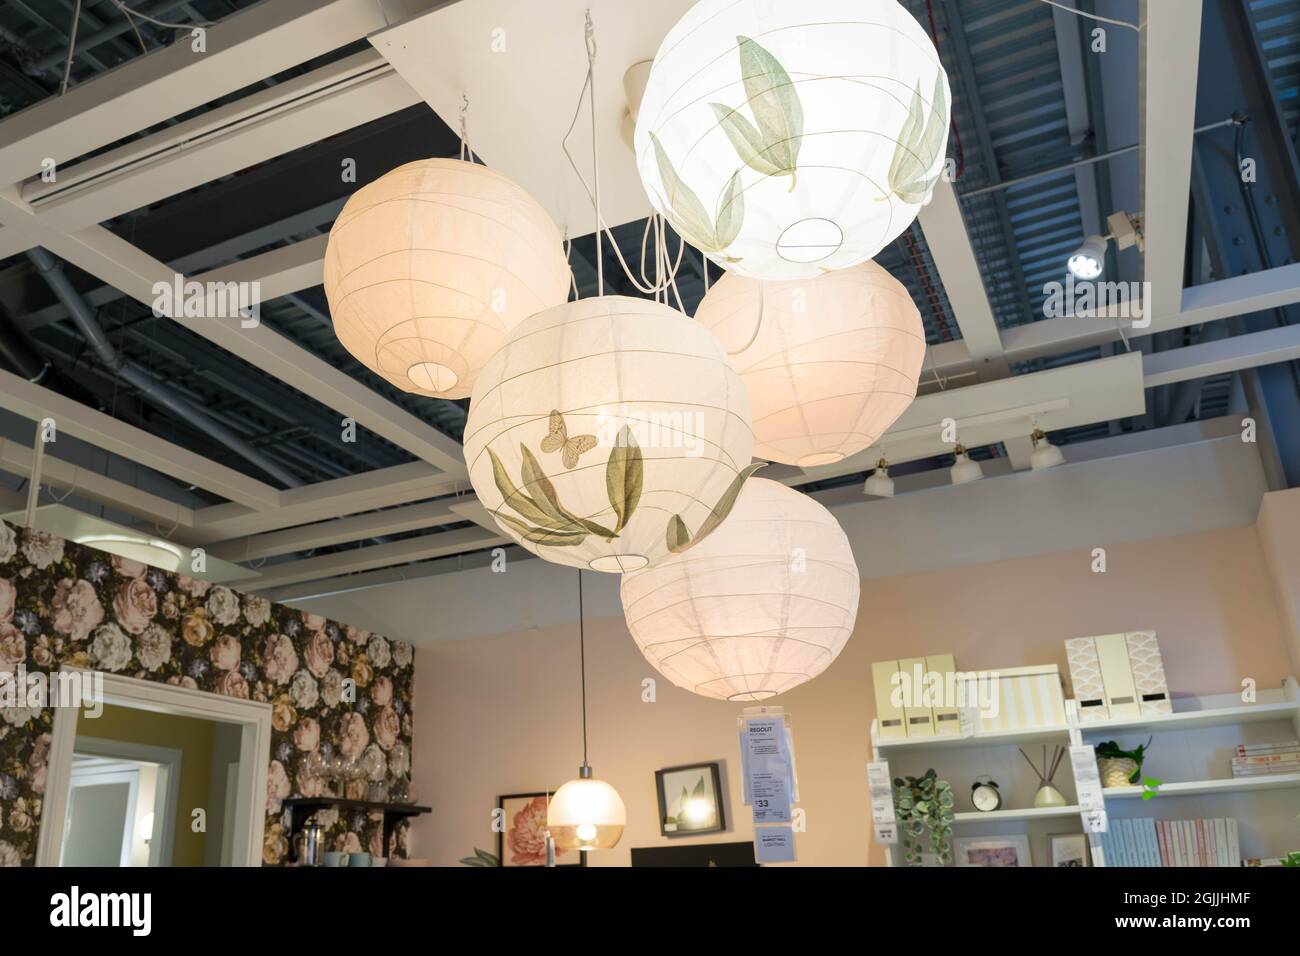 interior design. multiple paper lantern Pendant lamp shade for ceiling  lightings Stock Photo - Alamy